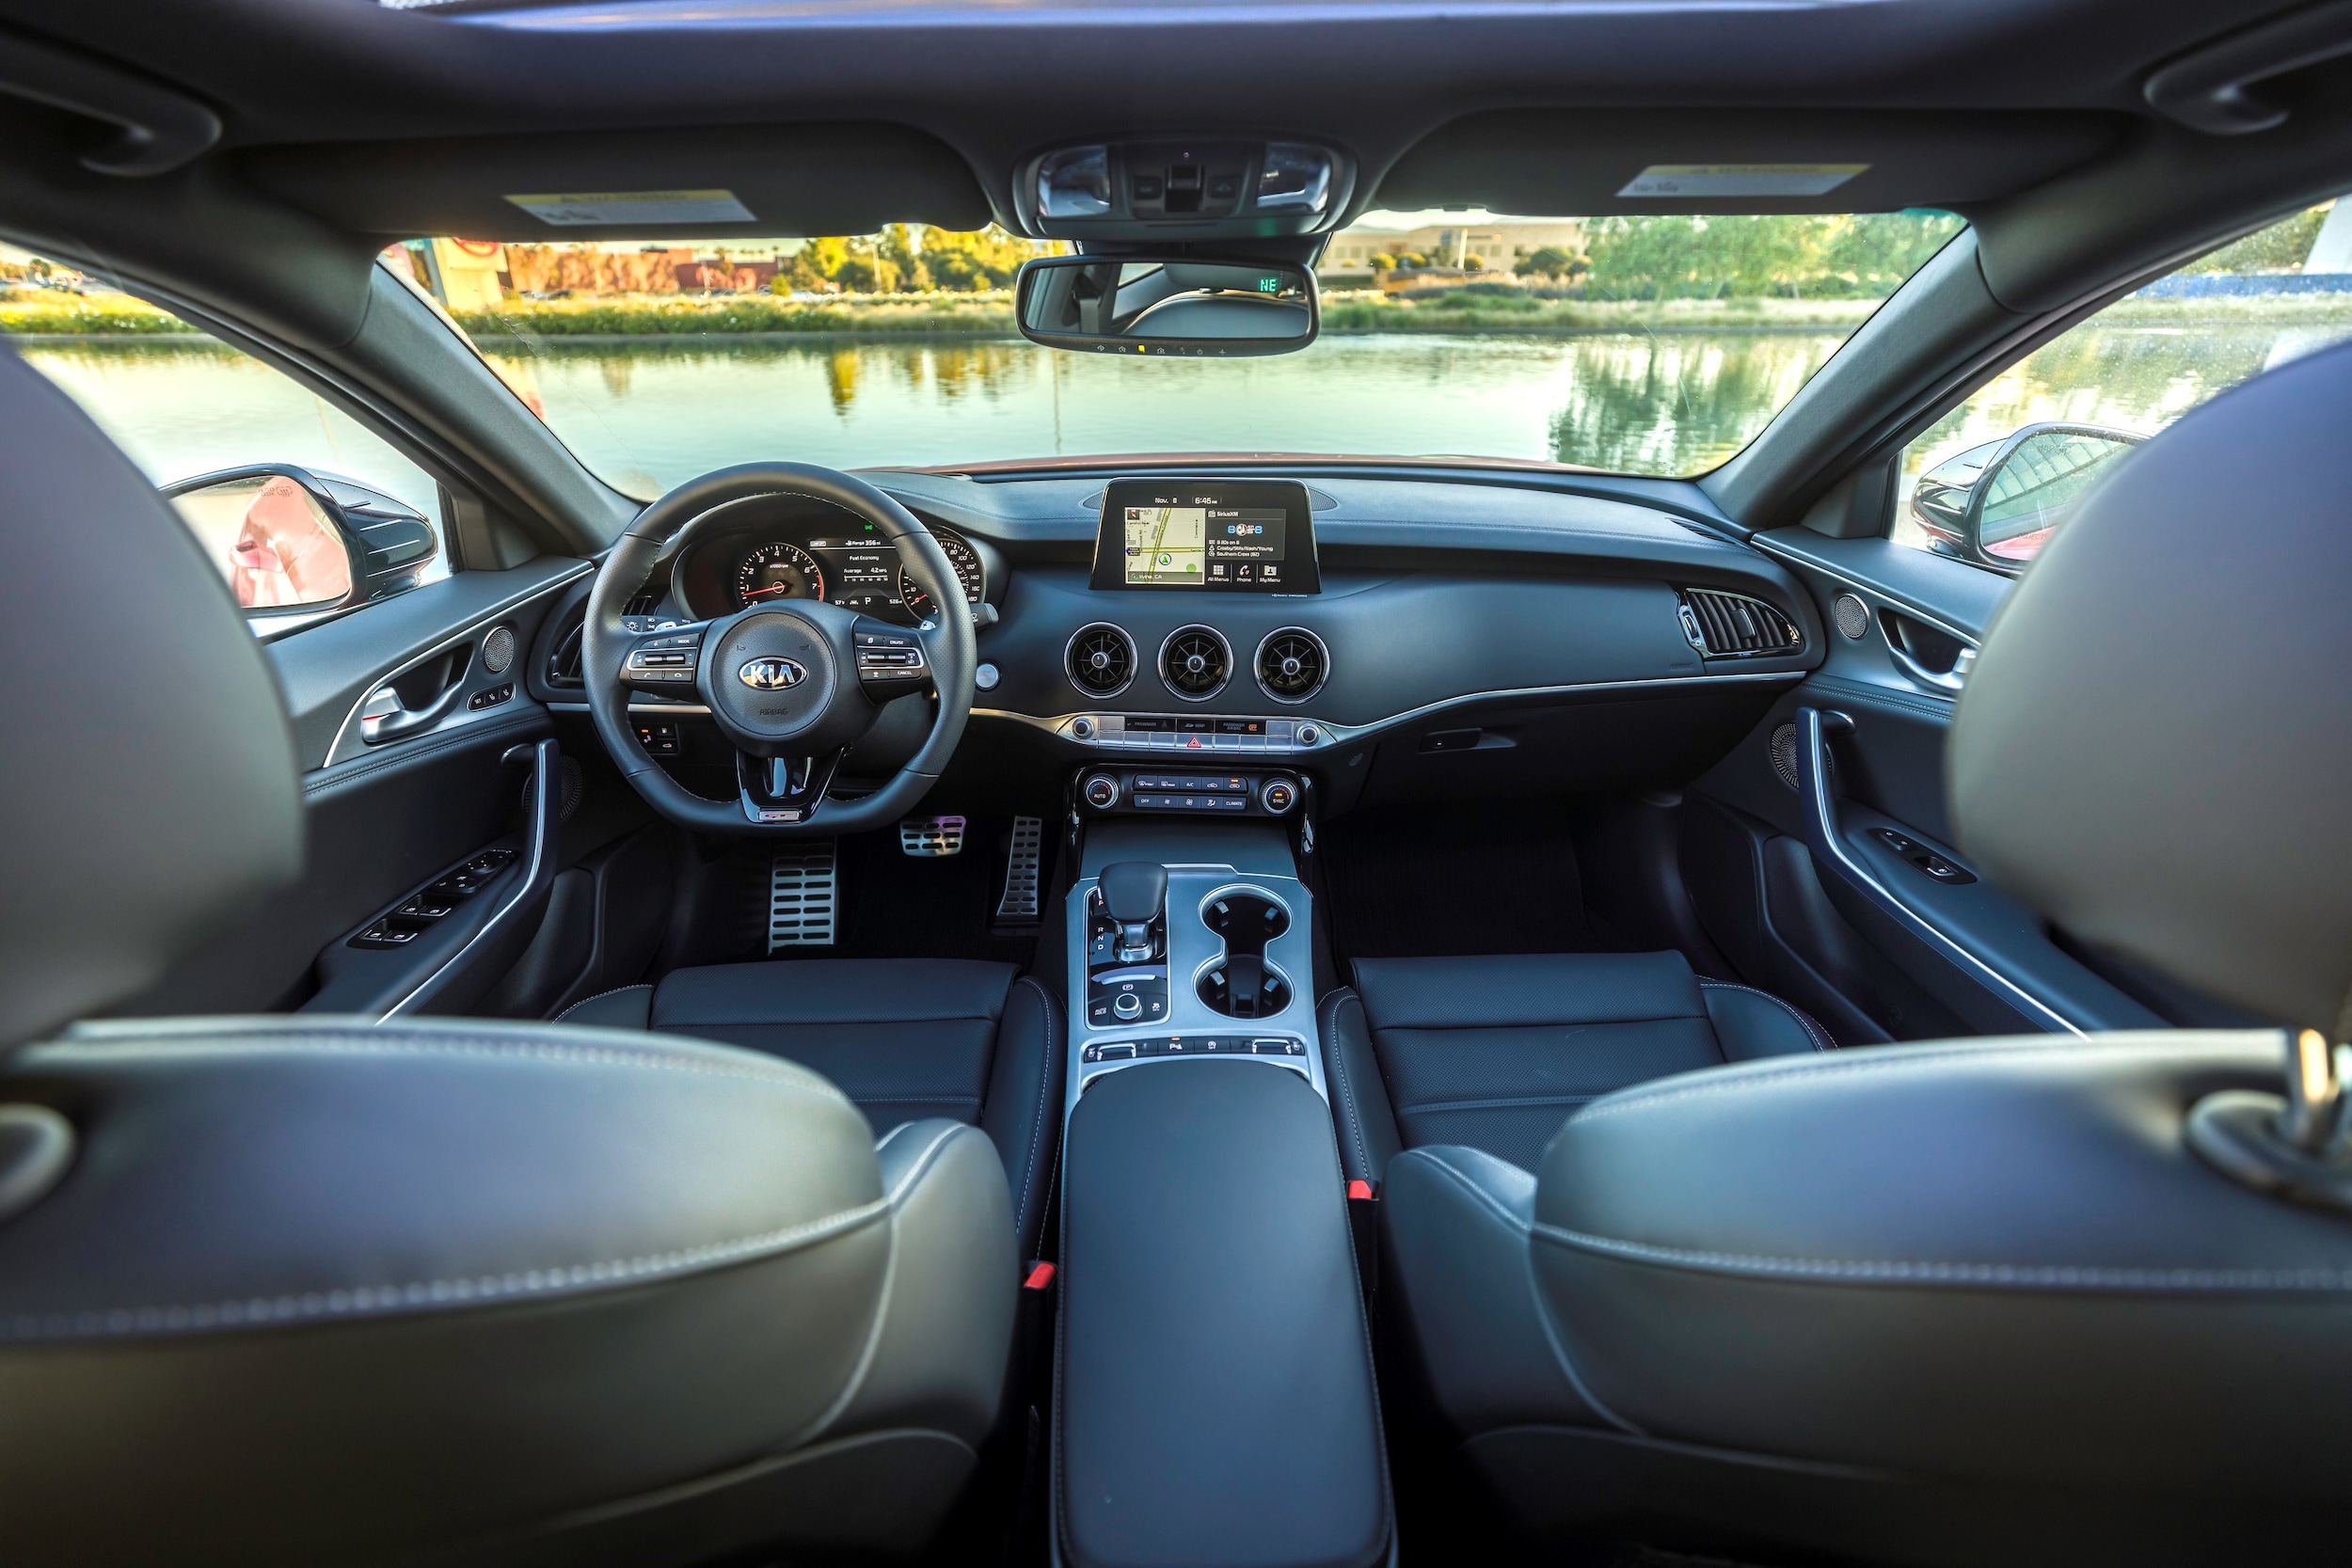 Autotrader Names Kia K5 a Top 10 Car Interior for 2021